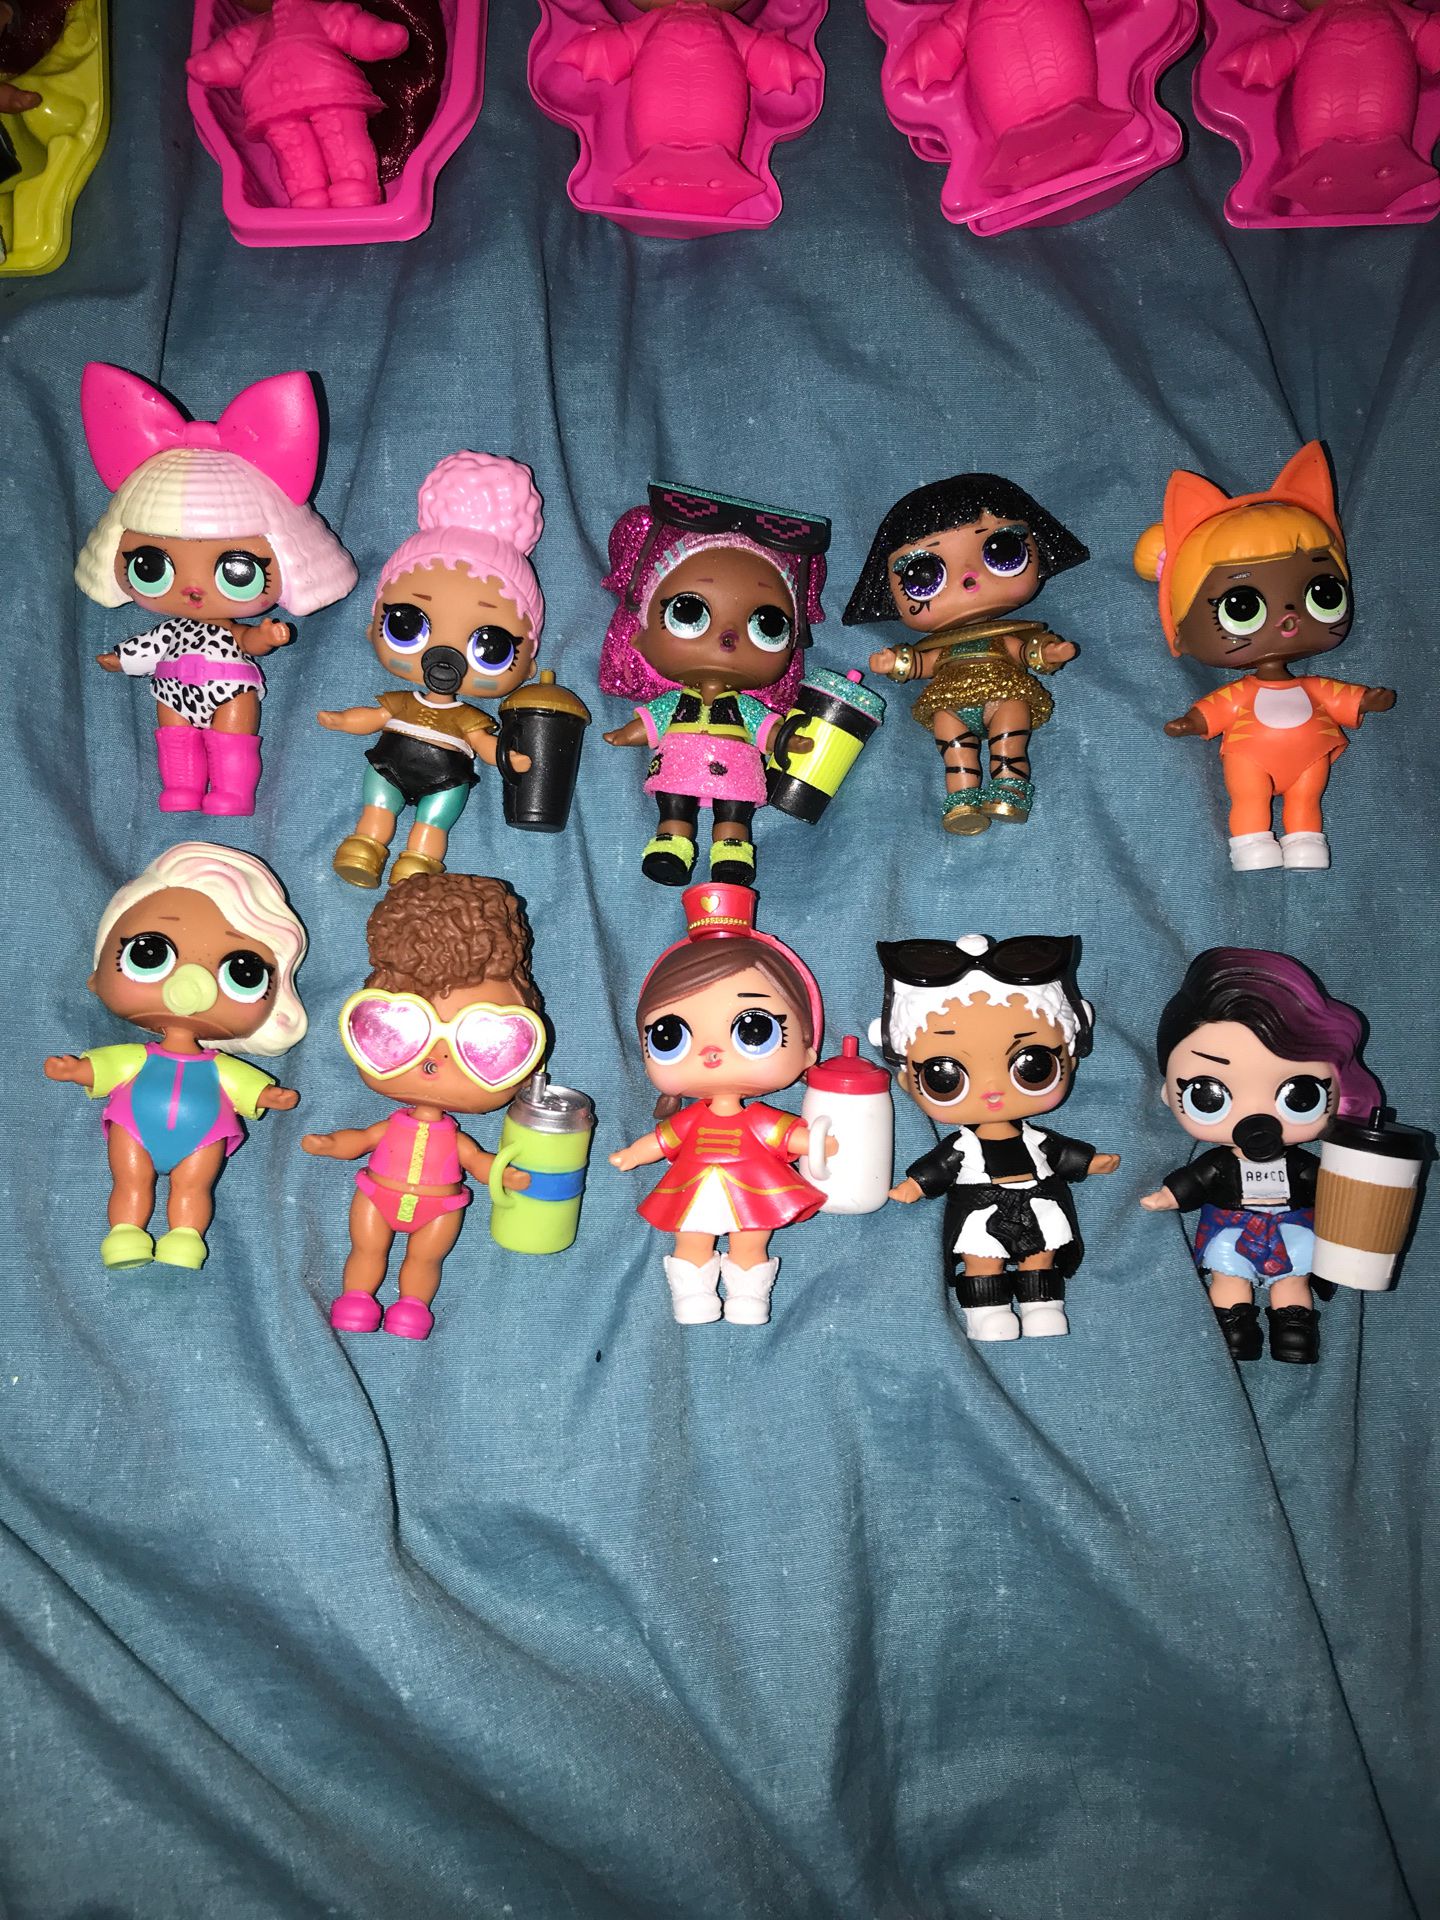 Lol surprise dolls - 10 random dolls